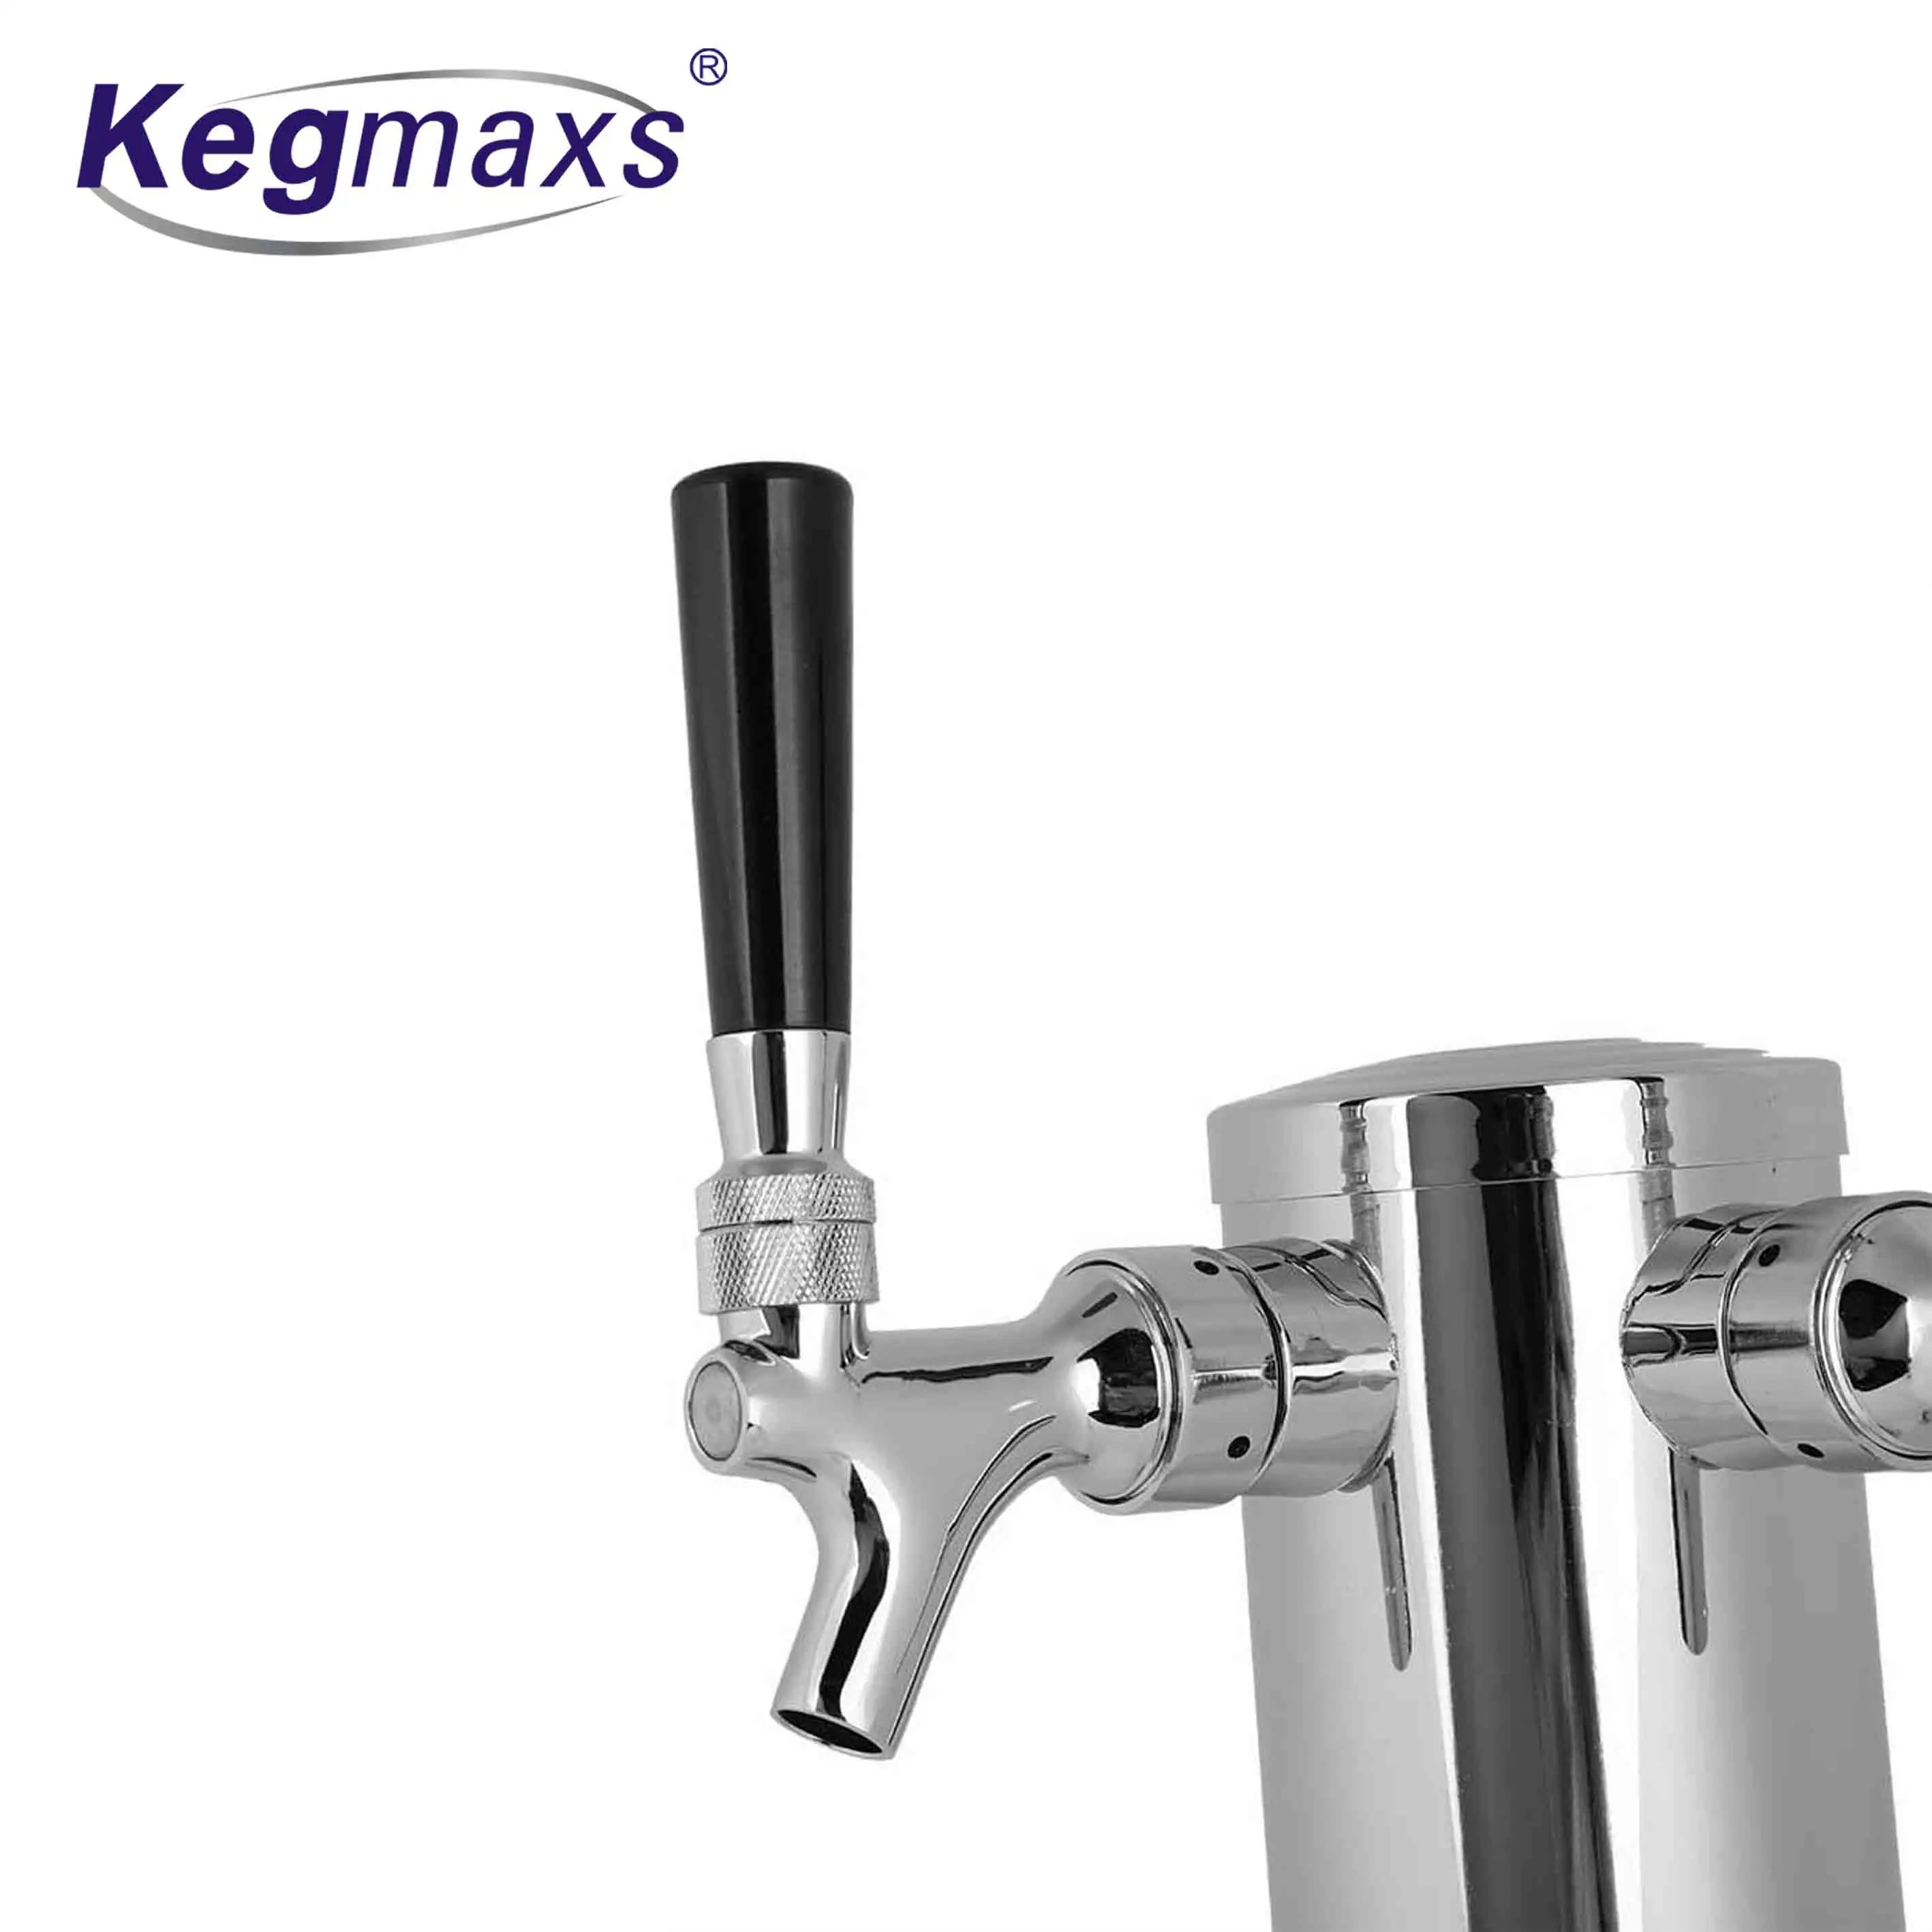 Kegmaxs-dispensador de cerveza de acero inoxidable, torre de barril con grifo, doble grifo, 2 mangueras